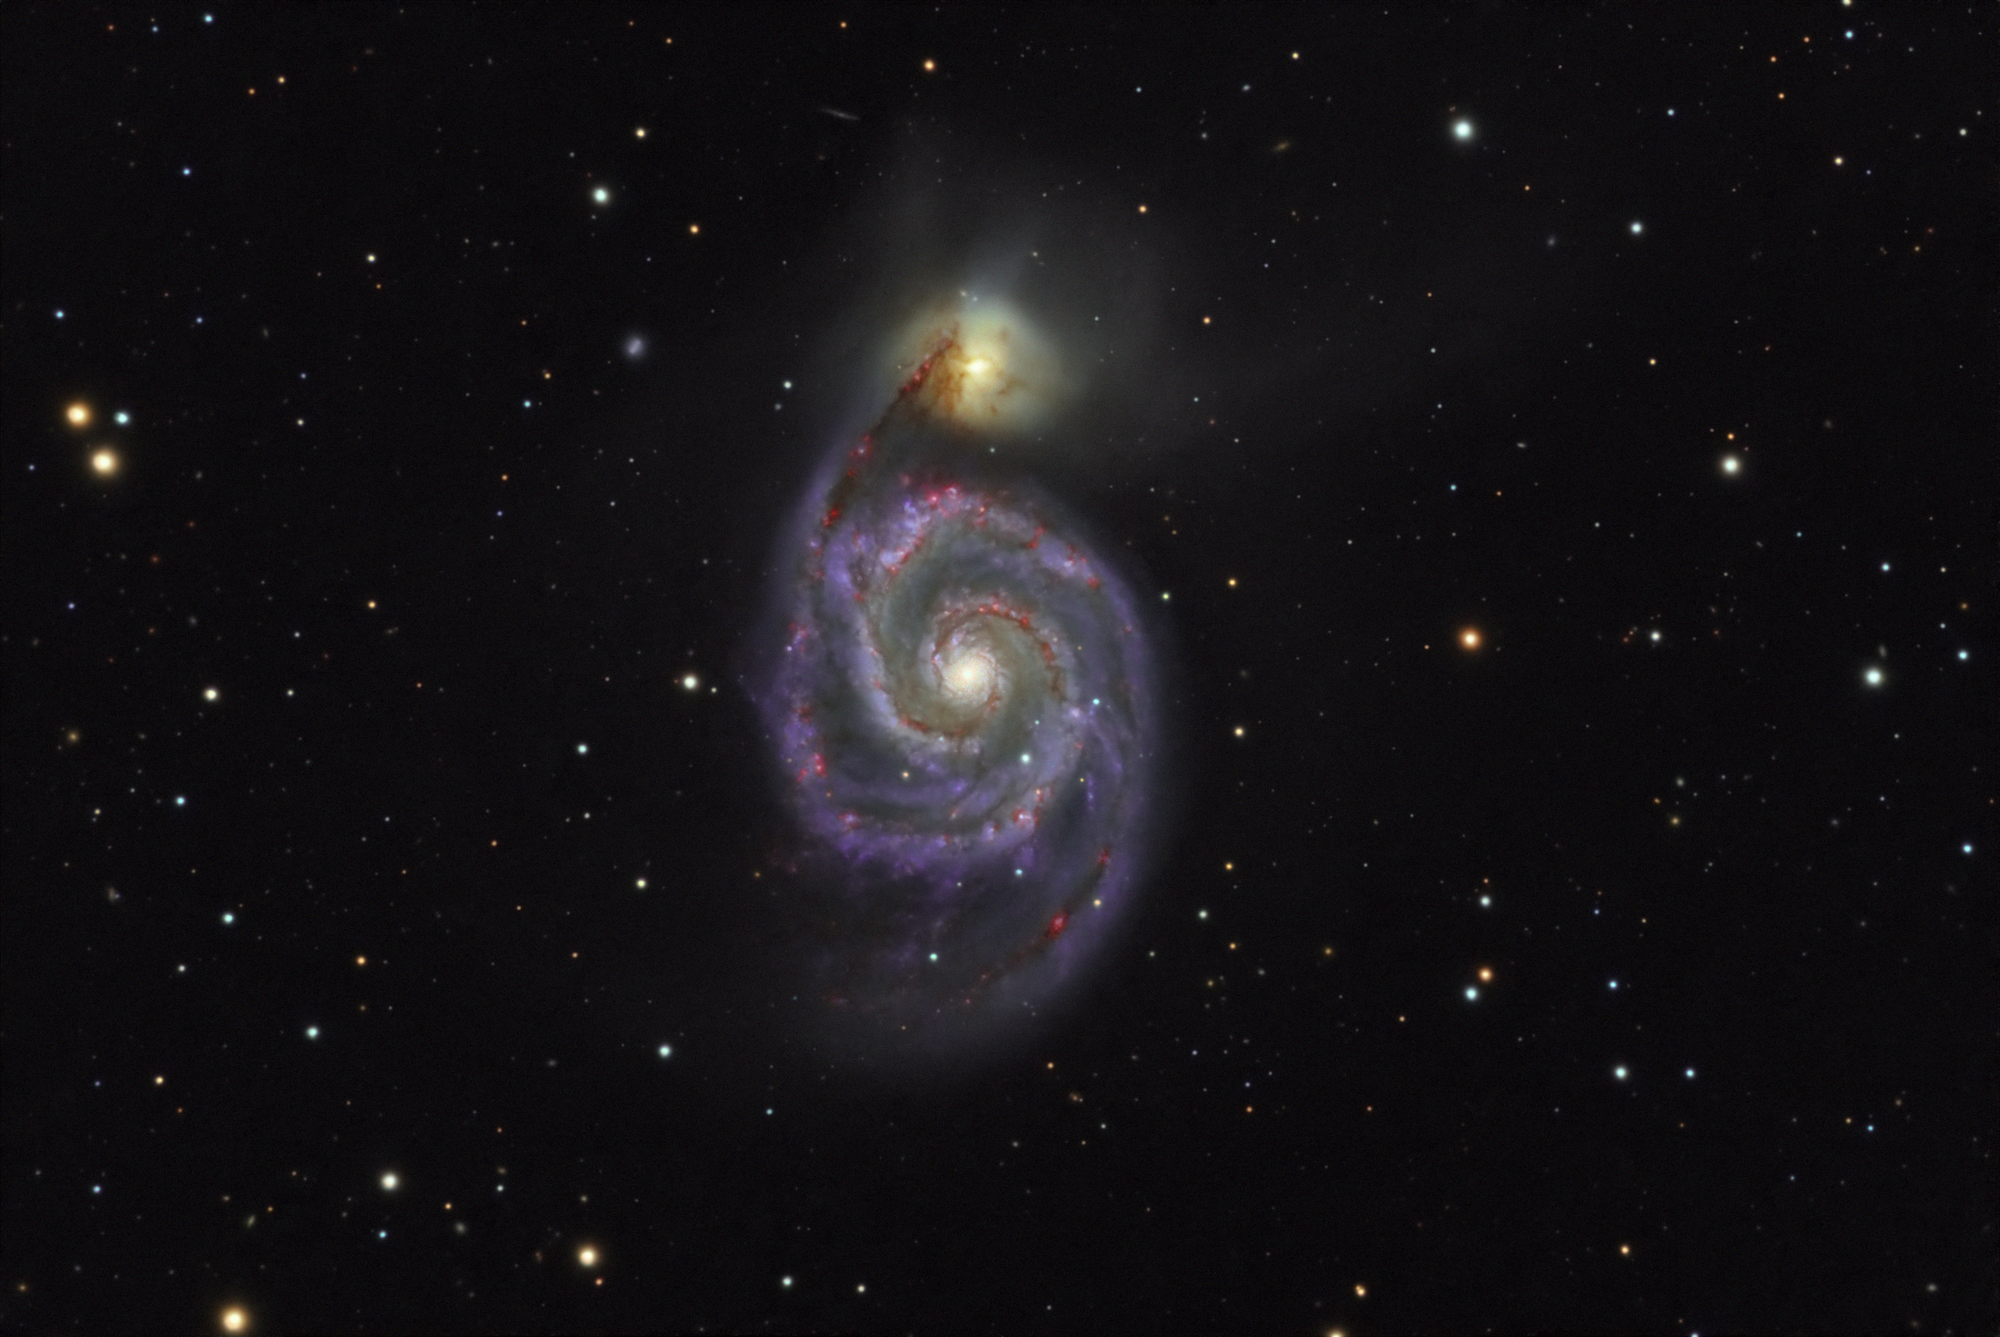 Messier 51 Whirpool galaxy